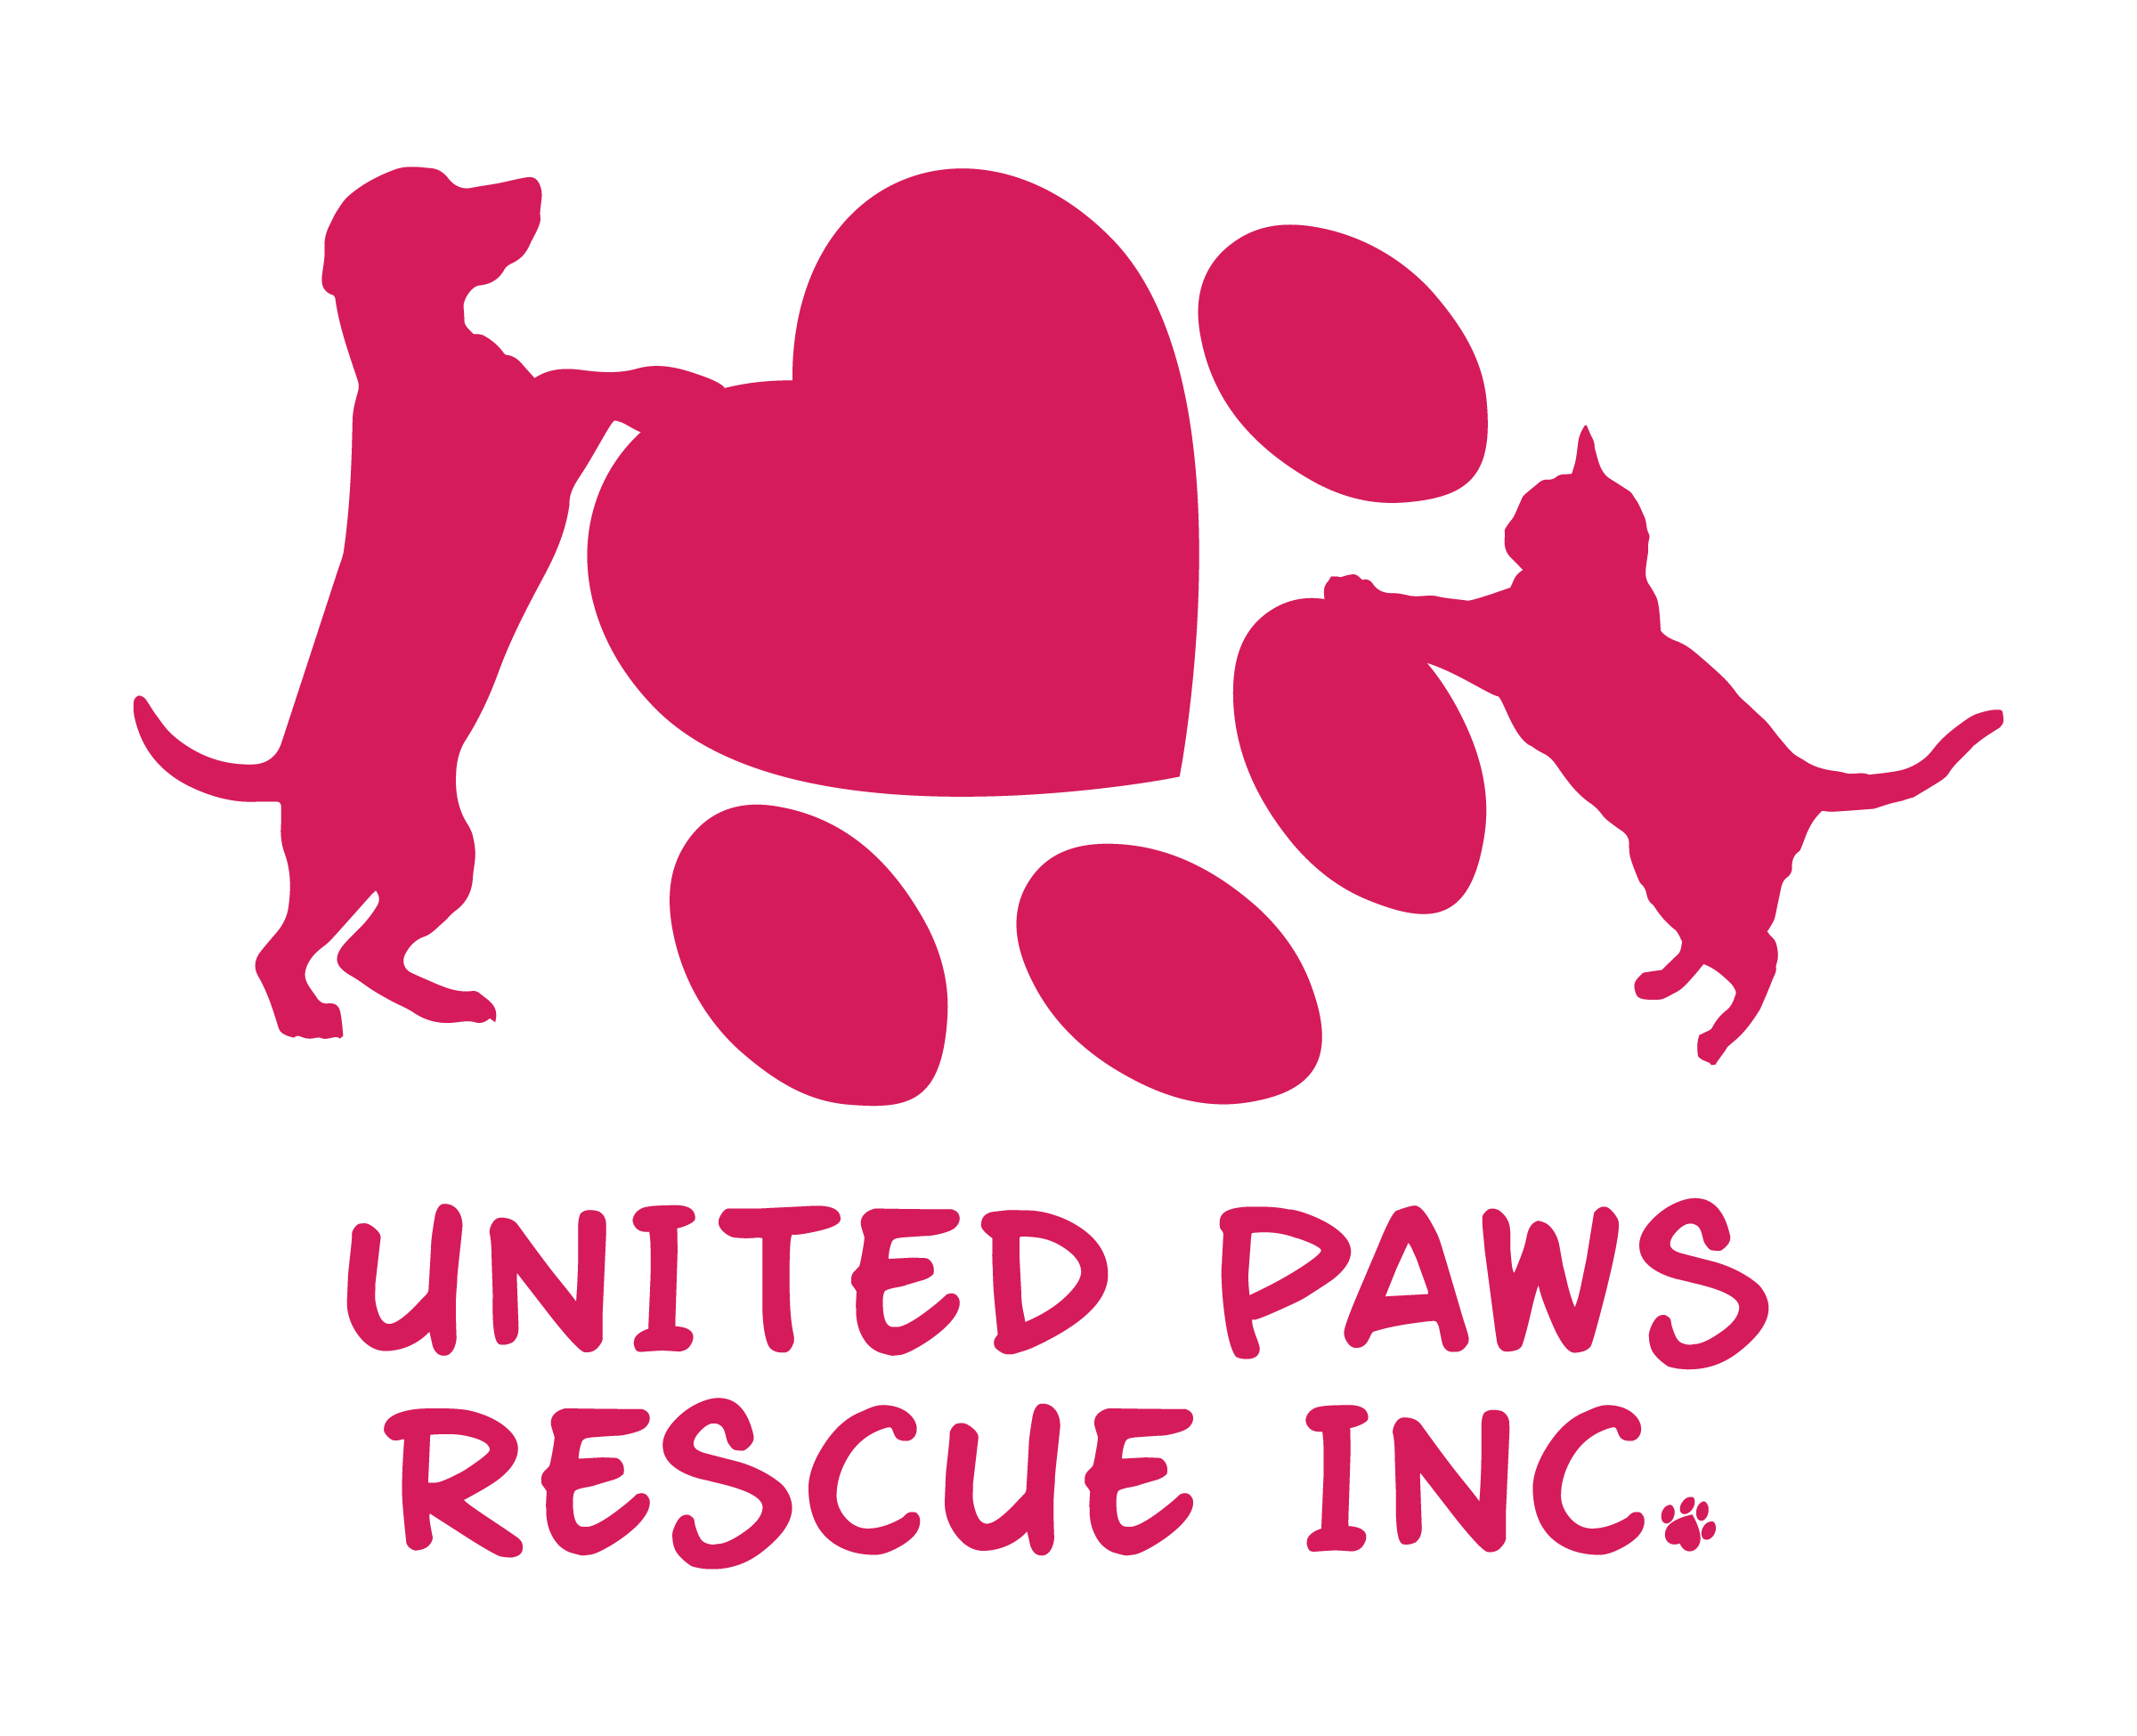 United Paws Rescue Inc